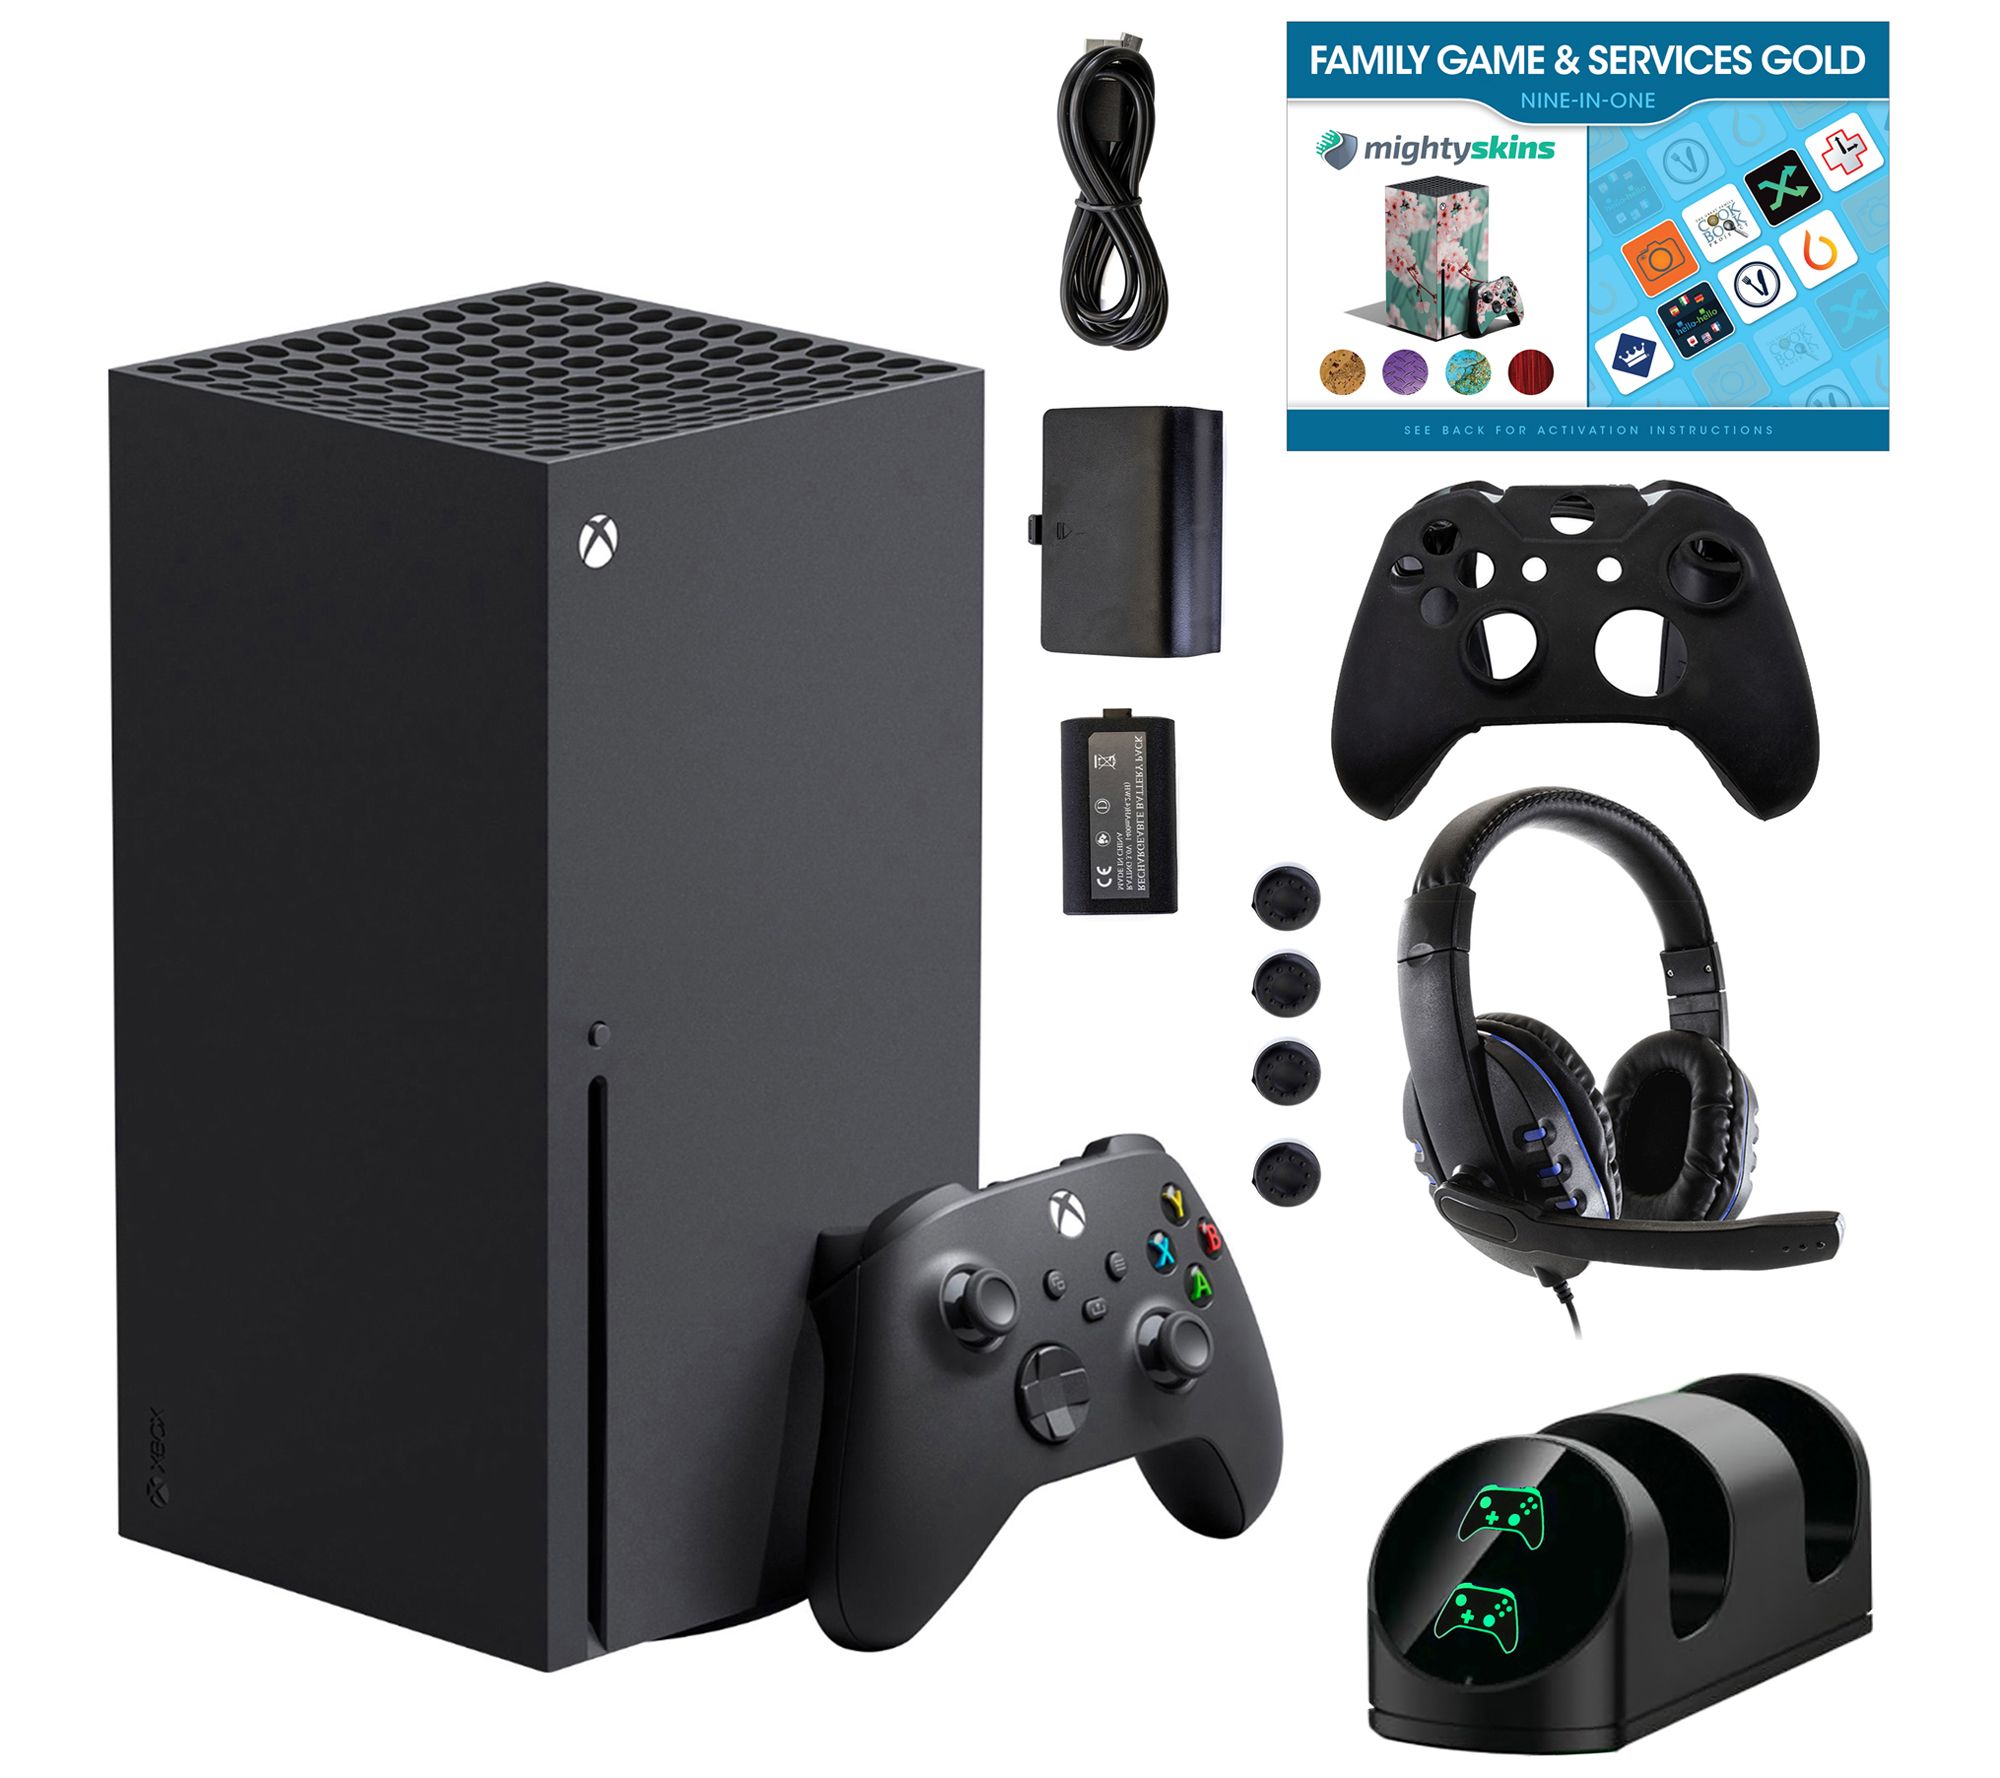 Xbox Series X 1TB Console w/ Accessories Kit &ega Voucher - QVC.com